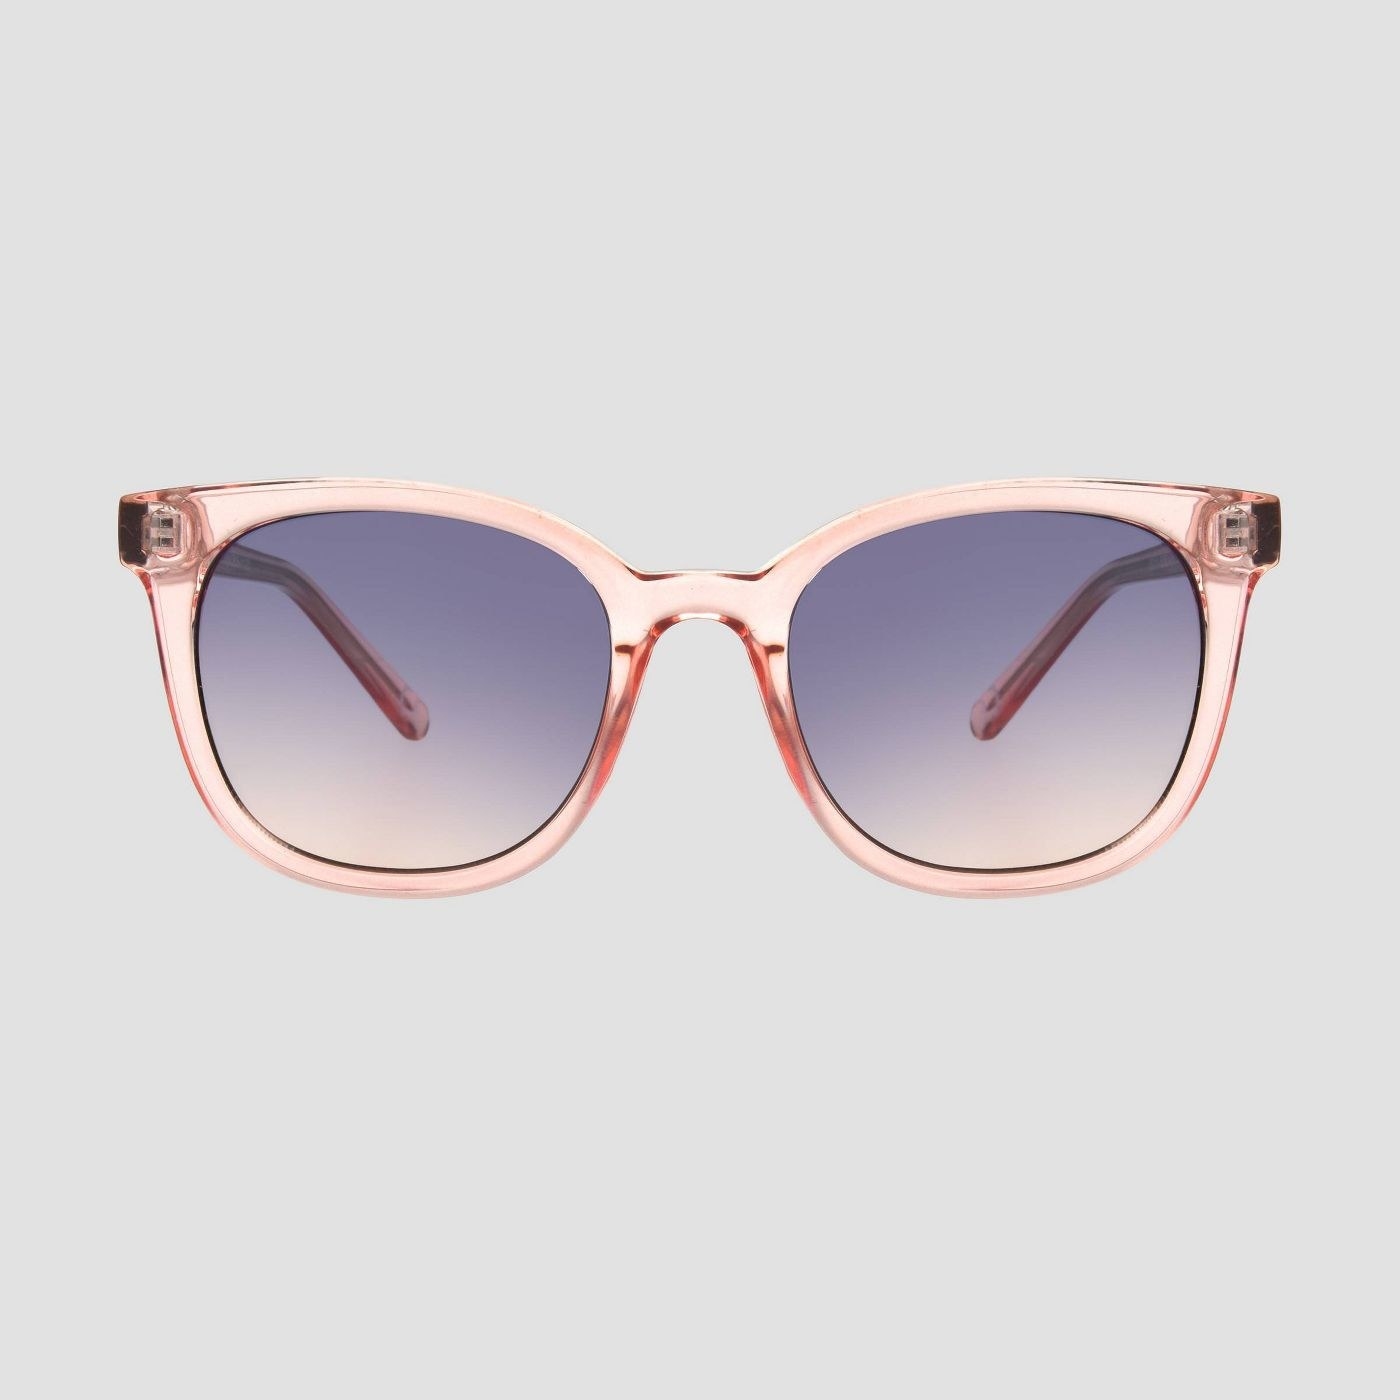 pink sunglasses 